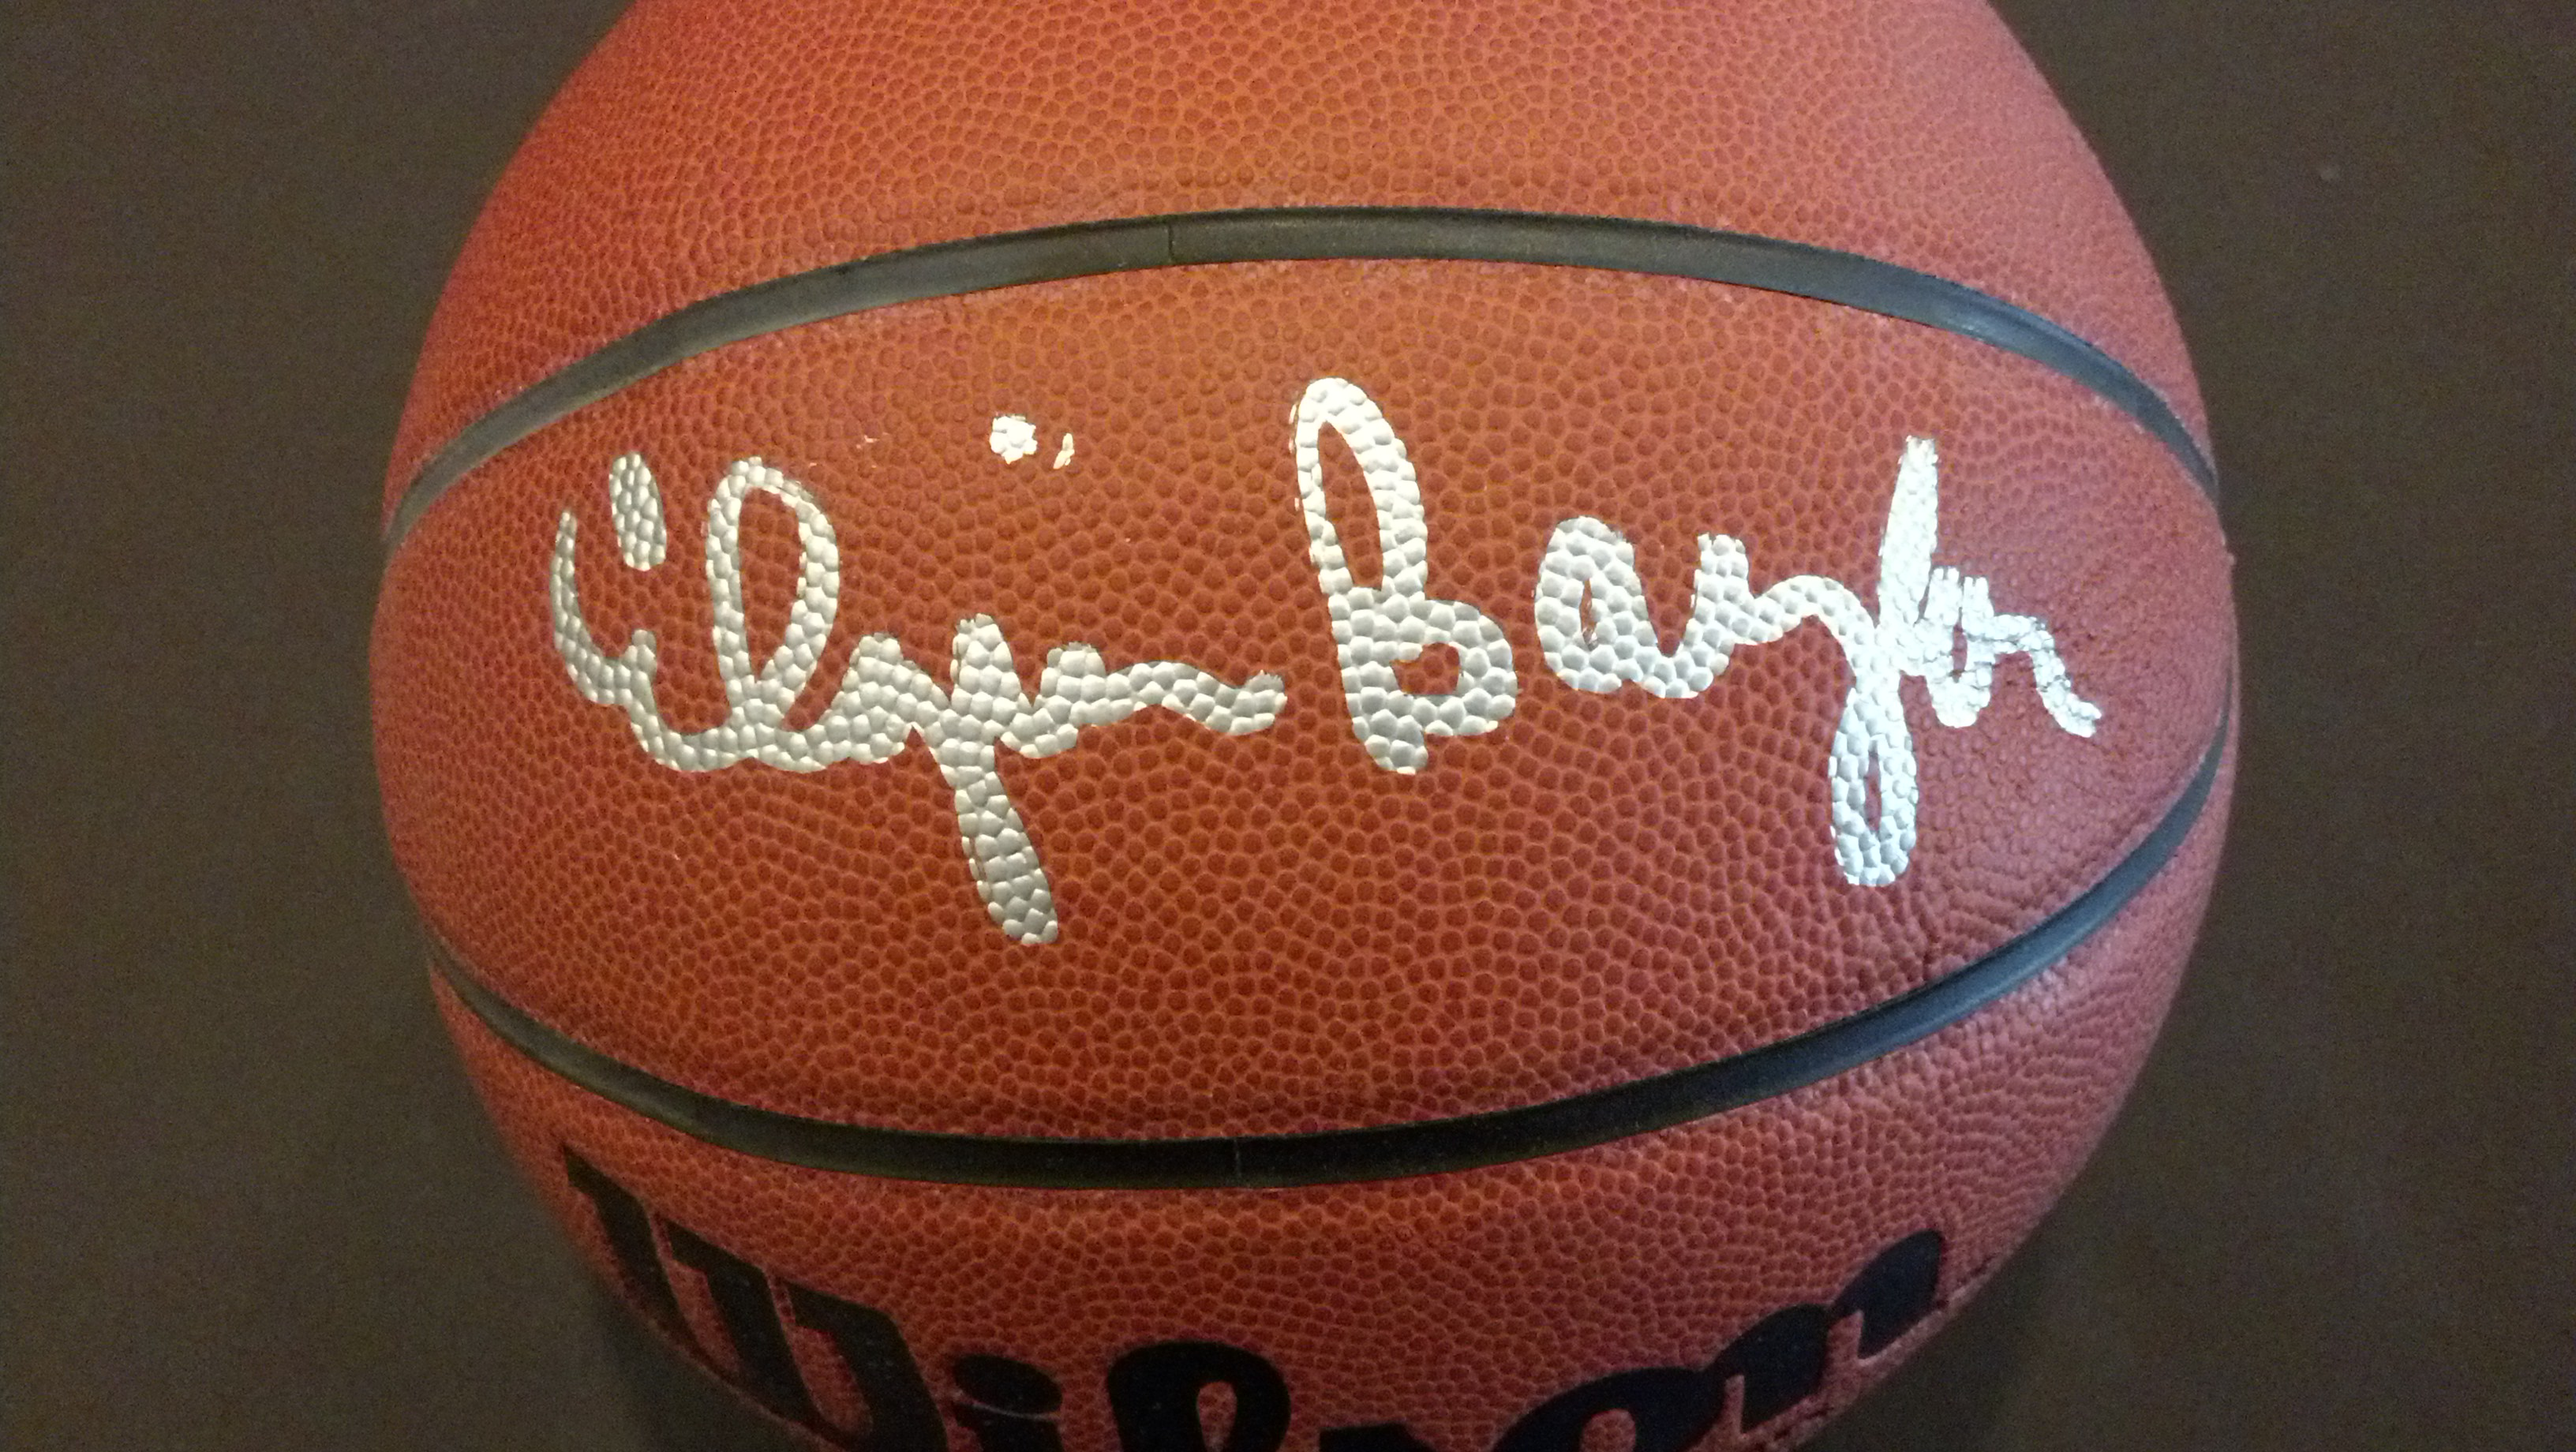 Elgin Baylor Autographed Basketball - GAI (Los Angeles Lakers)